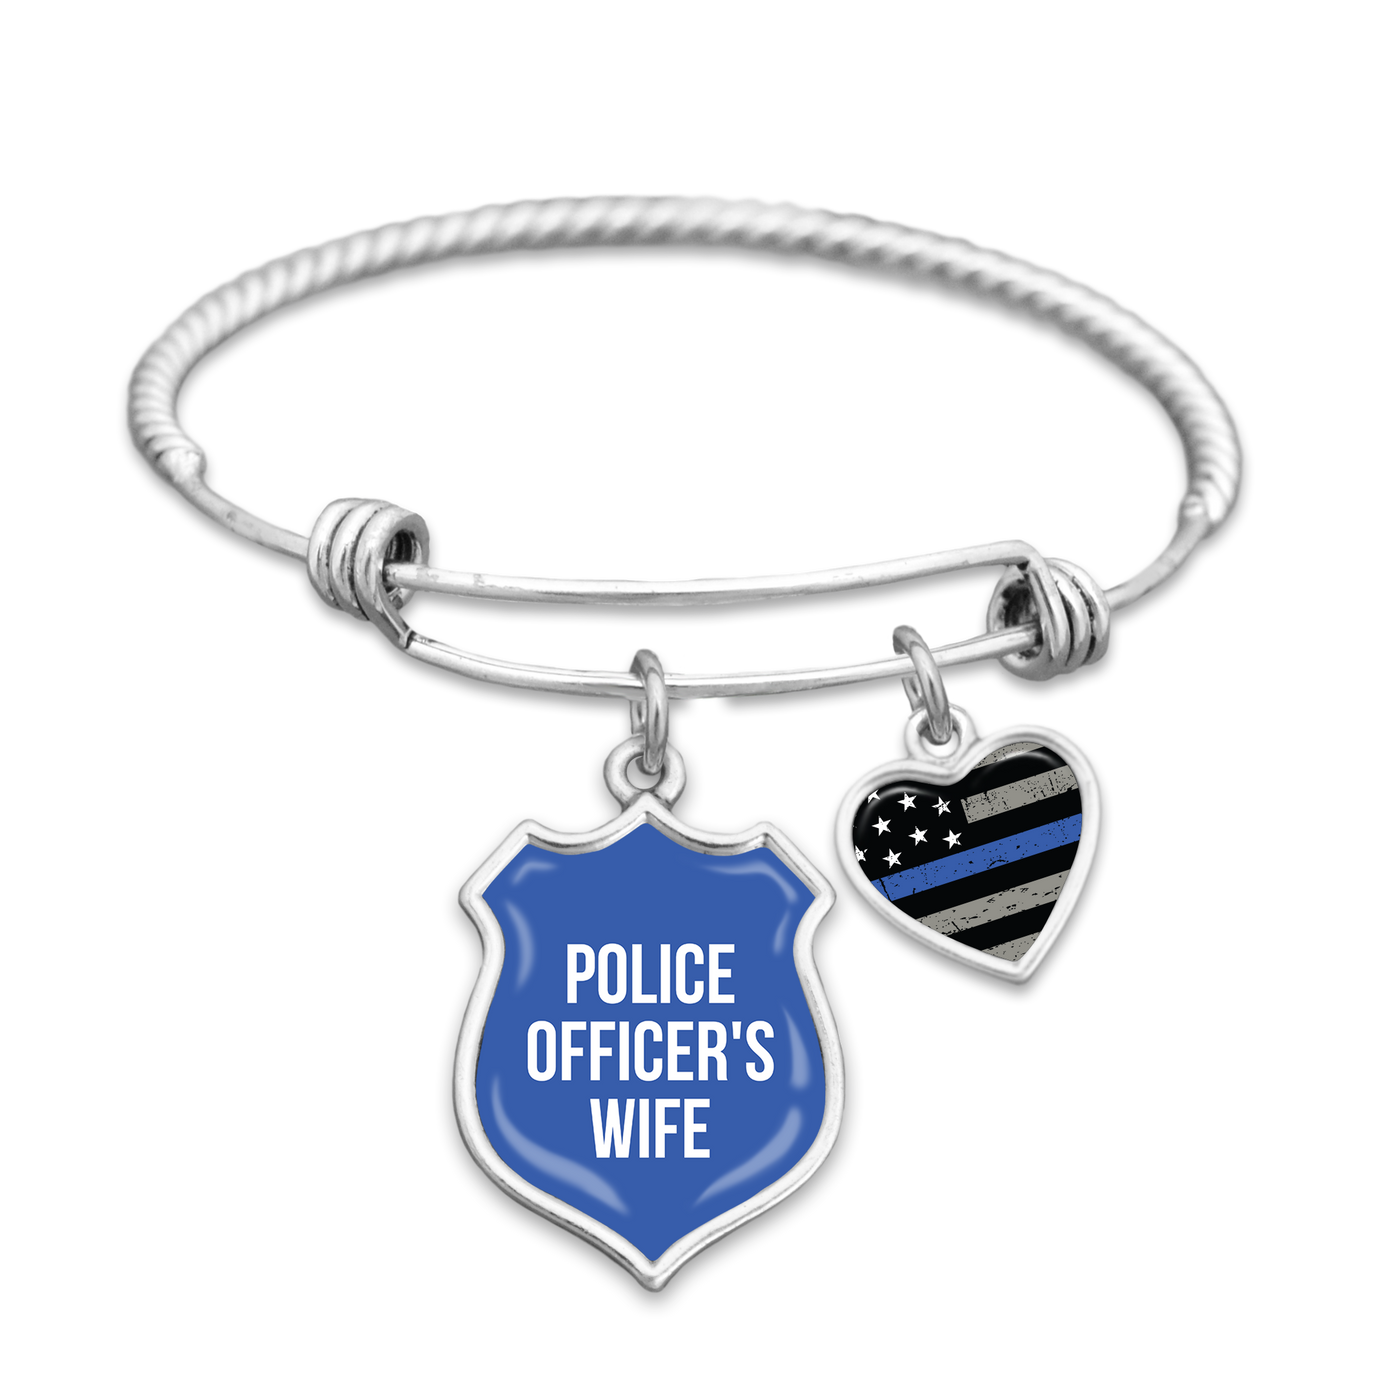 Police Officer's Wife Thin Blue Line Charm Bracelet